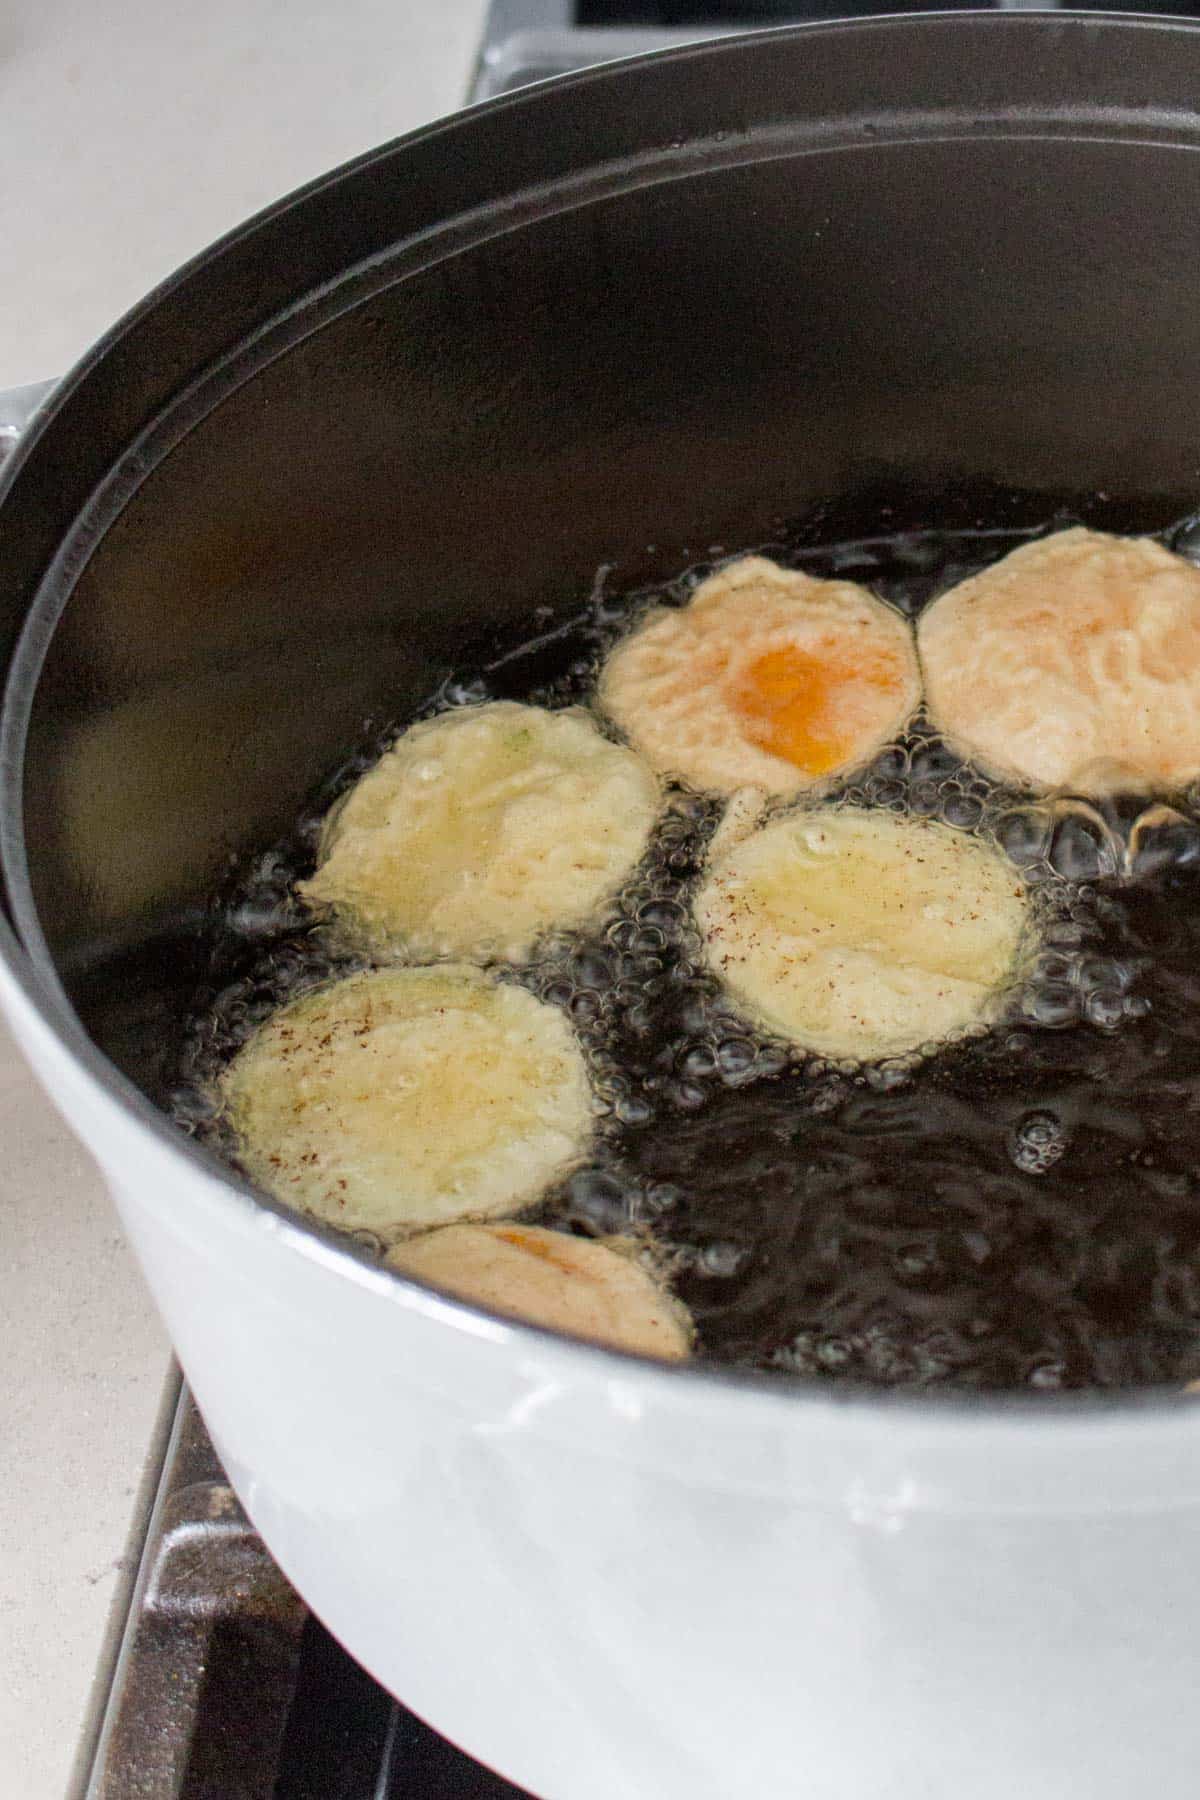 Vegetable tempura cooking in oil in a pot.